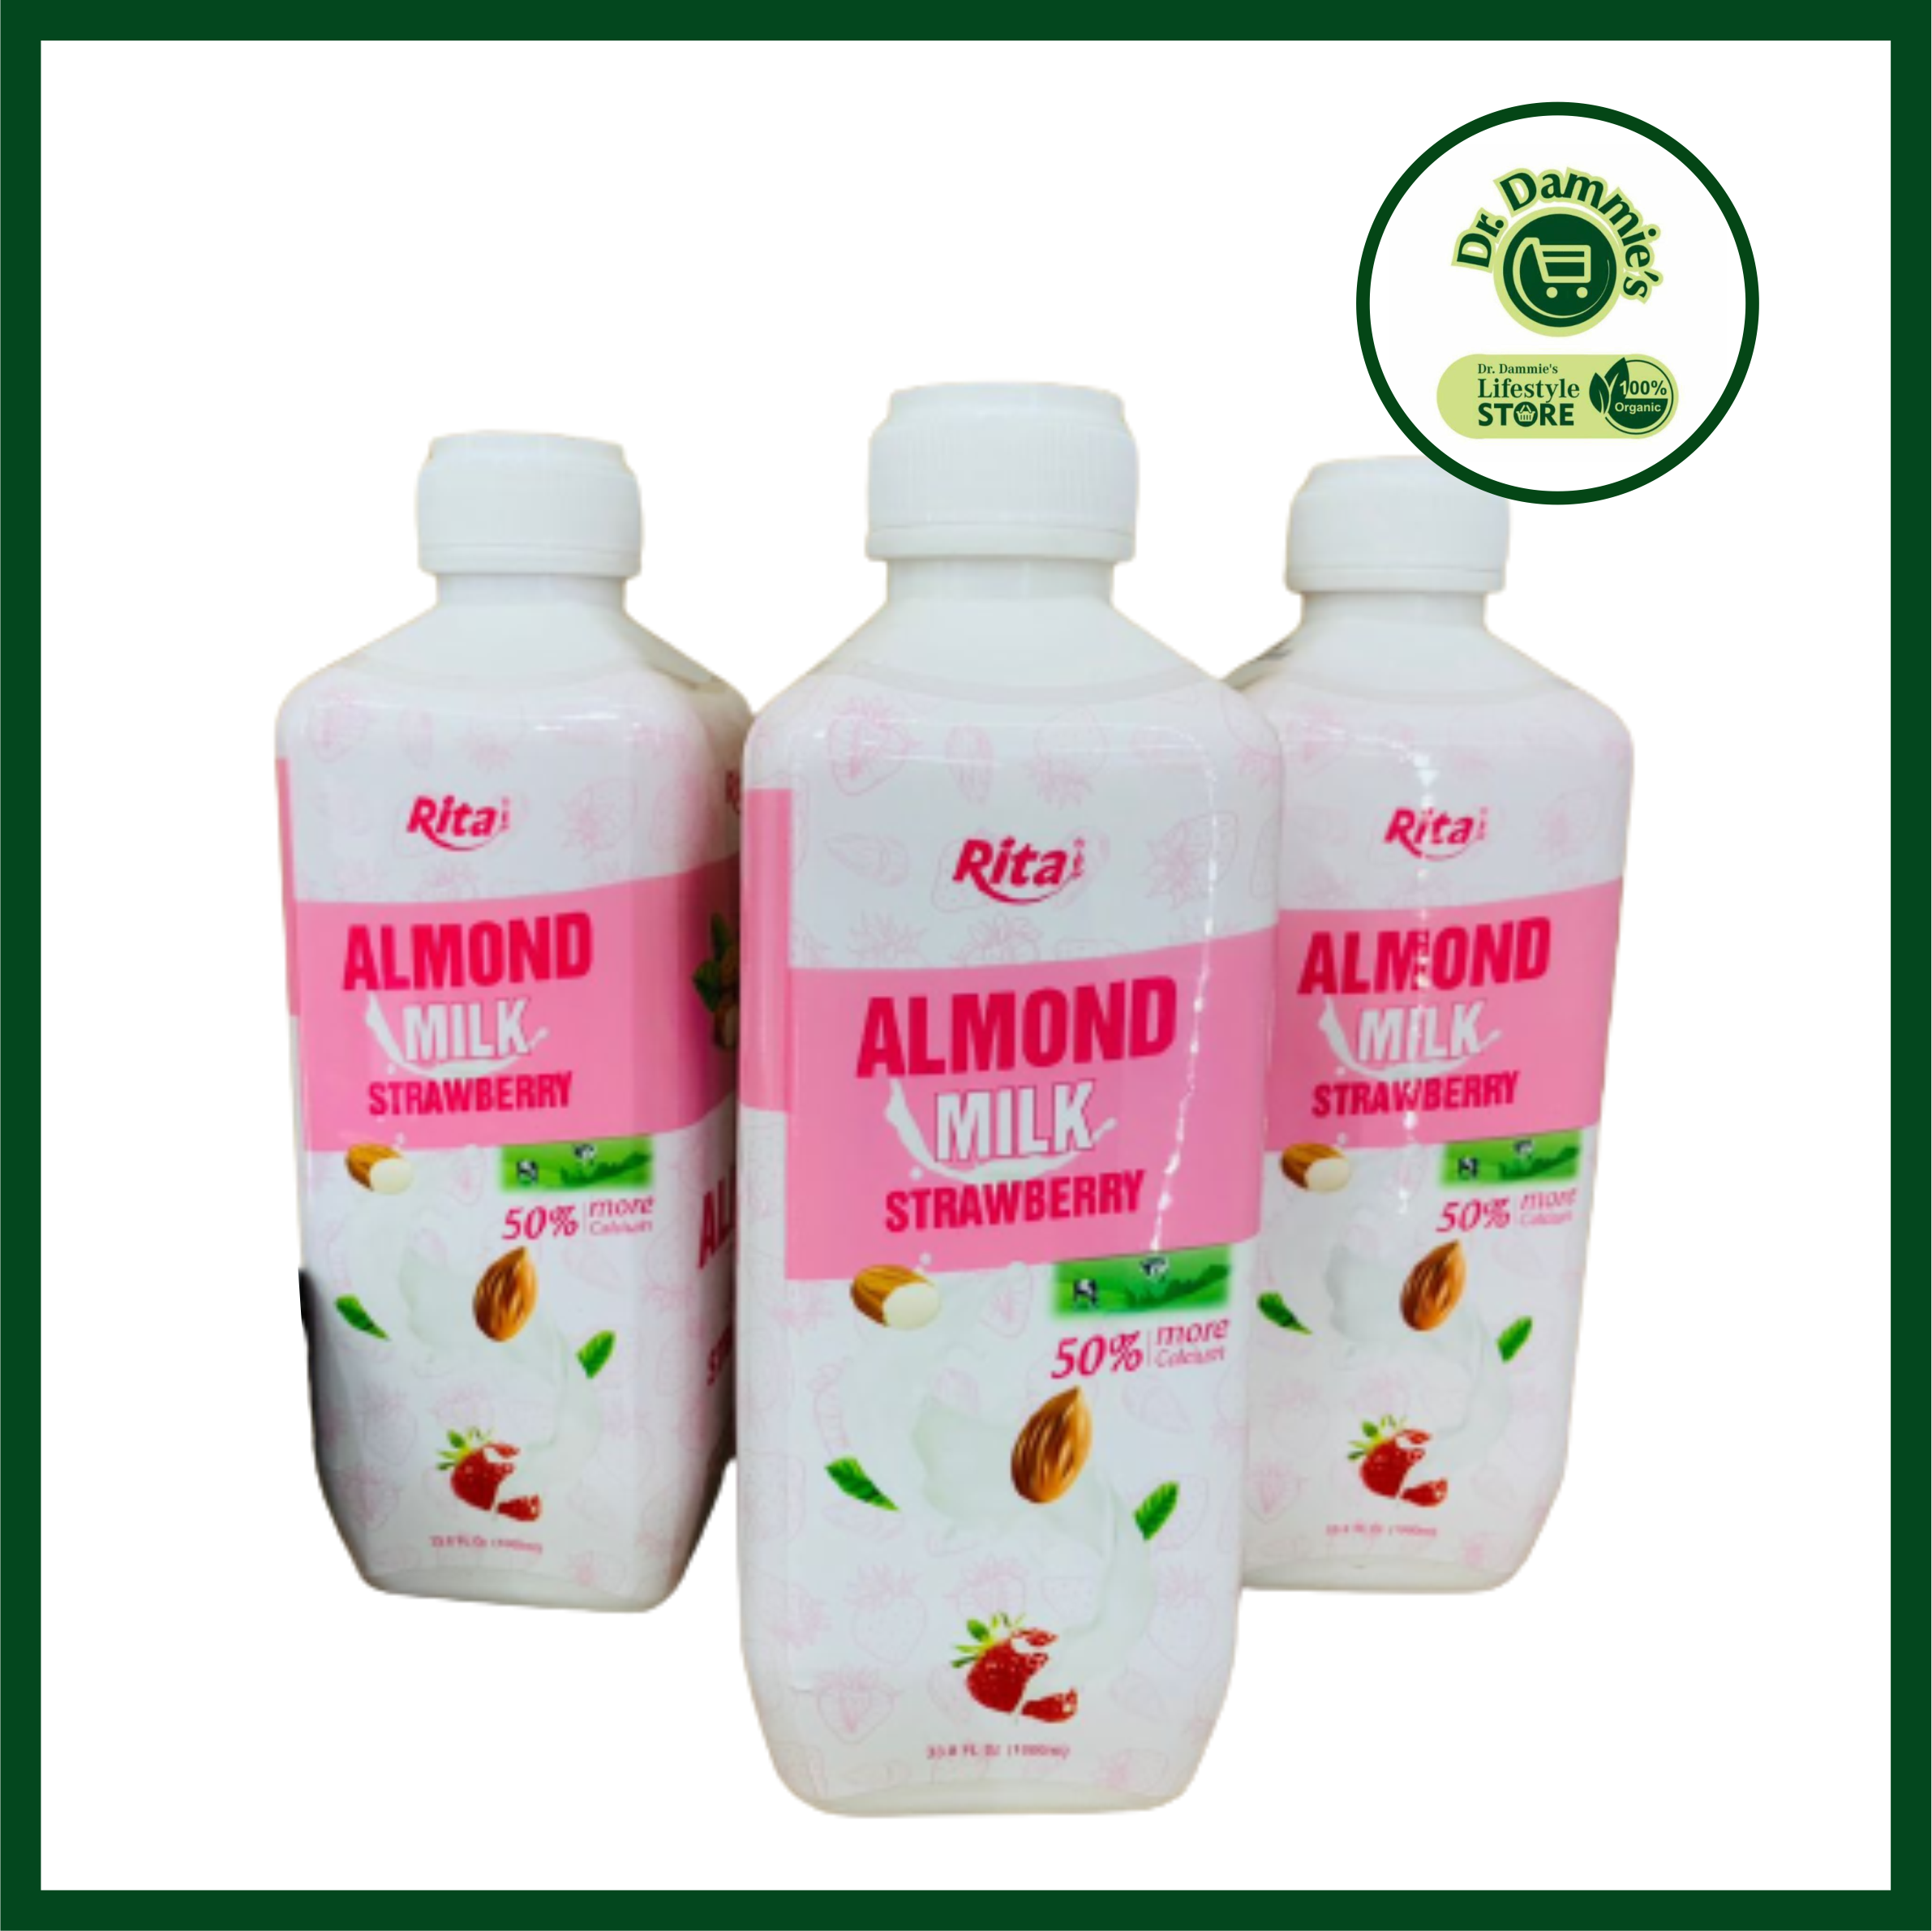 Ritai Almond Milk Strawberry details